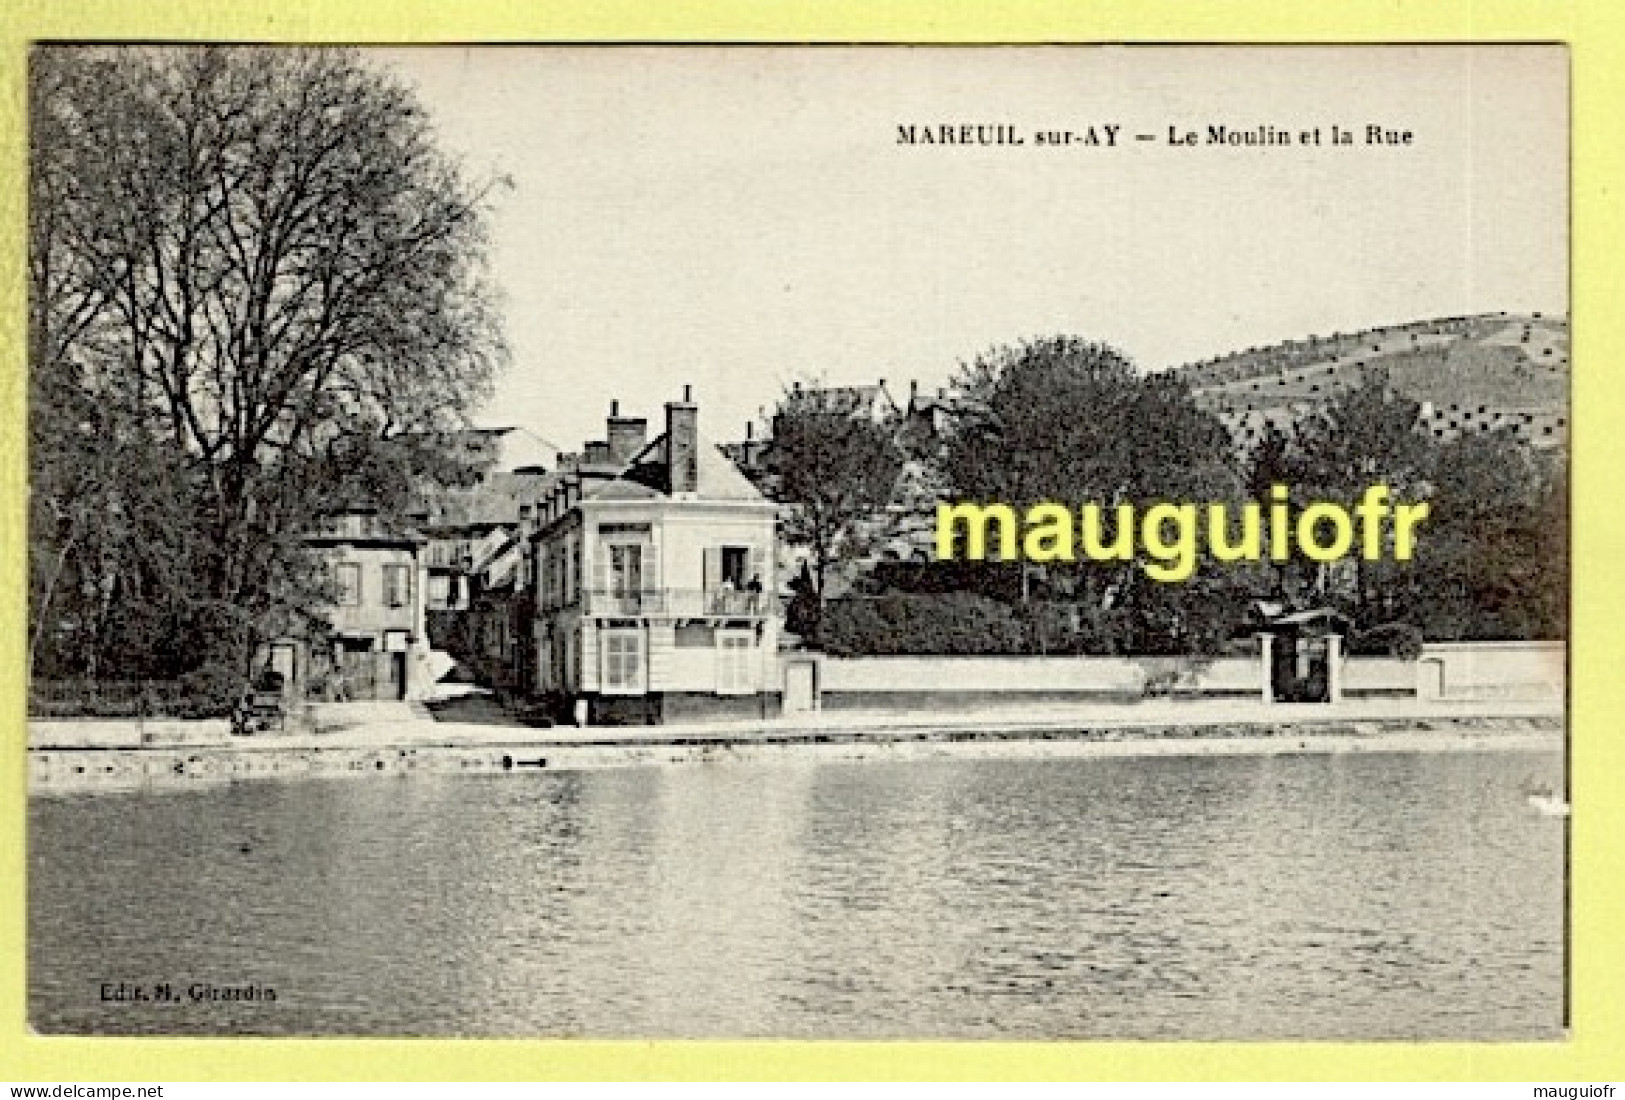 51 MARNE / MAREUIL-SUR-AY / LE MOULIN ET LA RUE / 1917 - Mareuil-sur-Ay